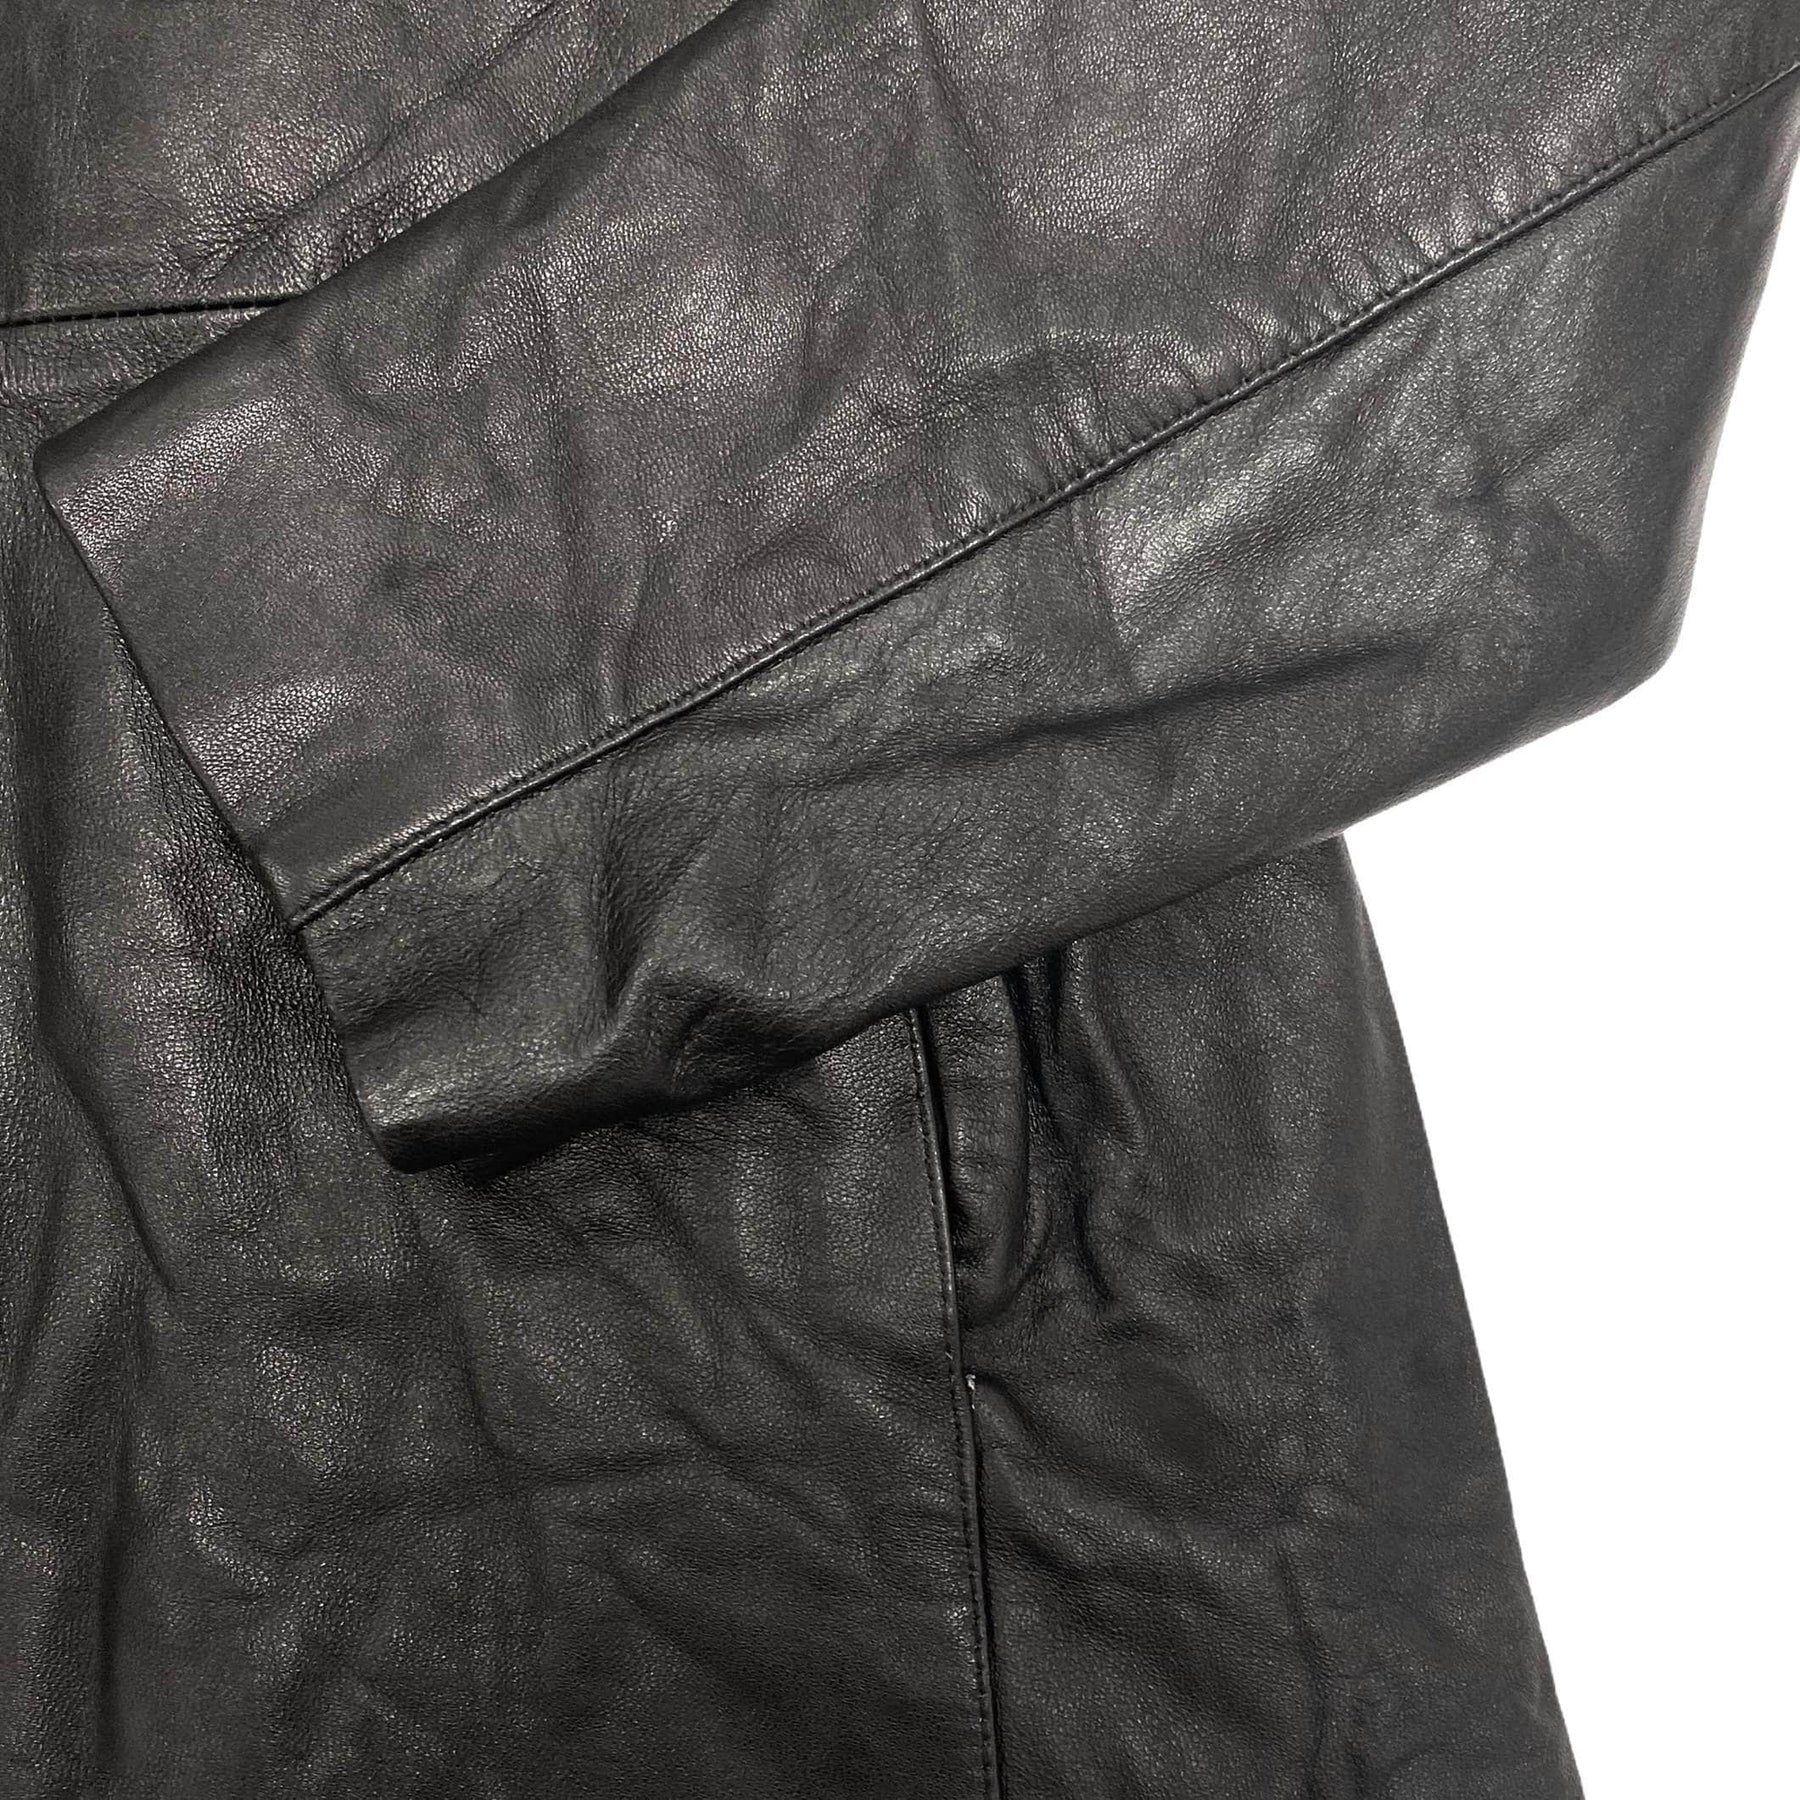 Unimoda Black Leather Coat